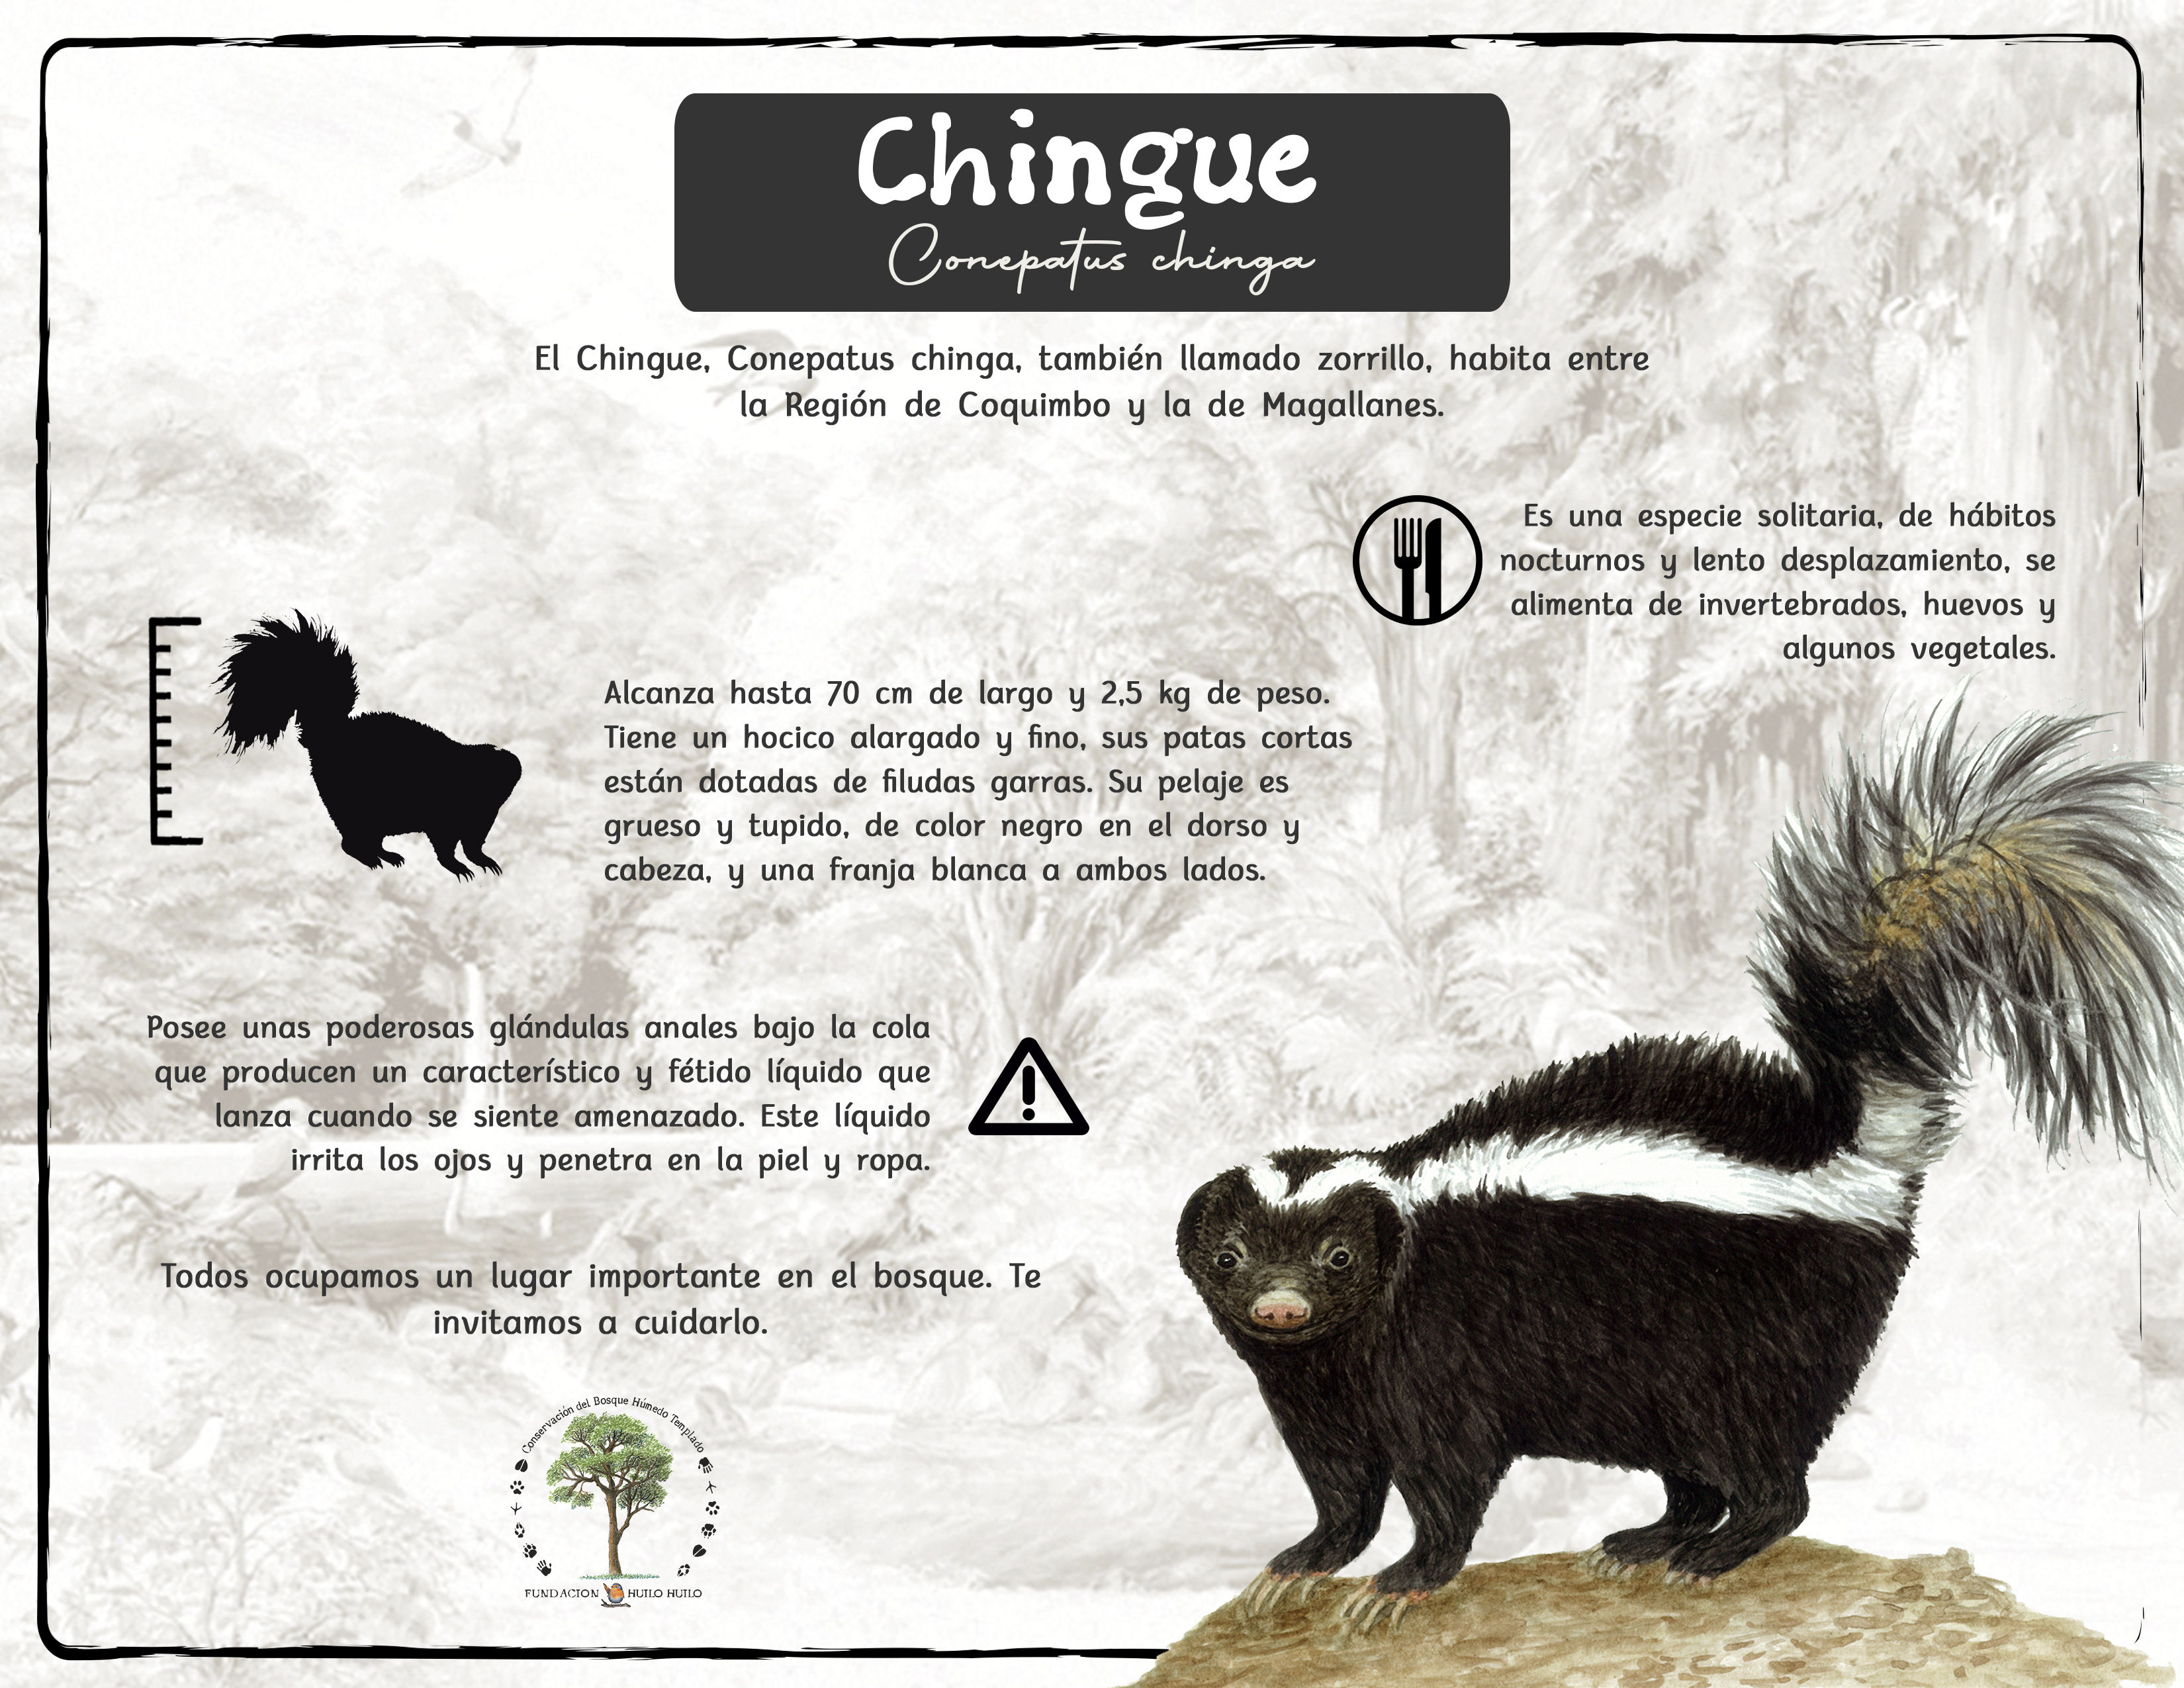 Chingue